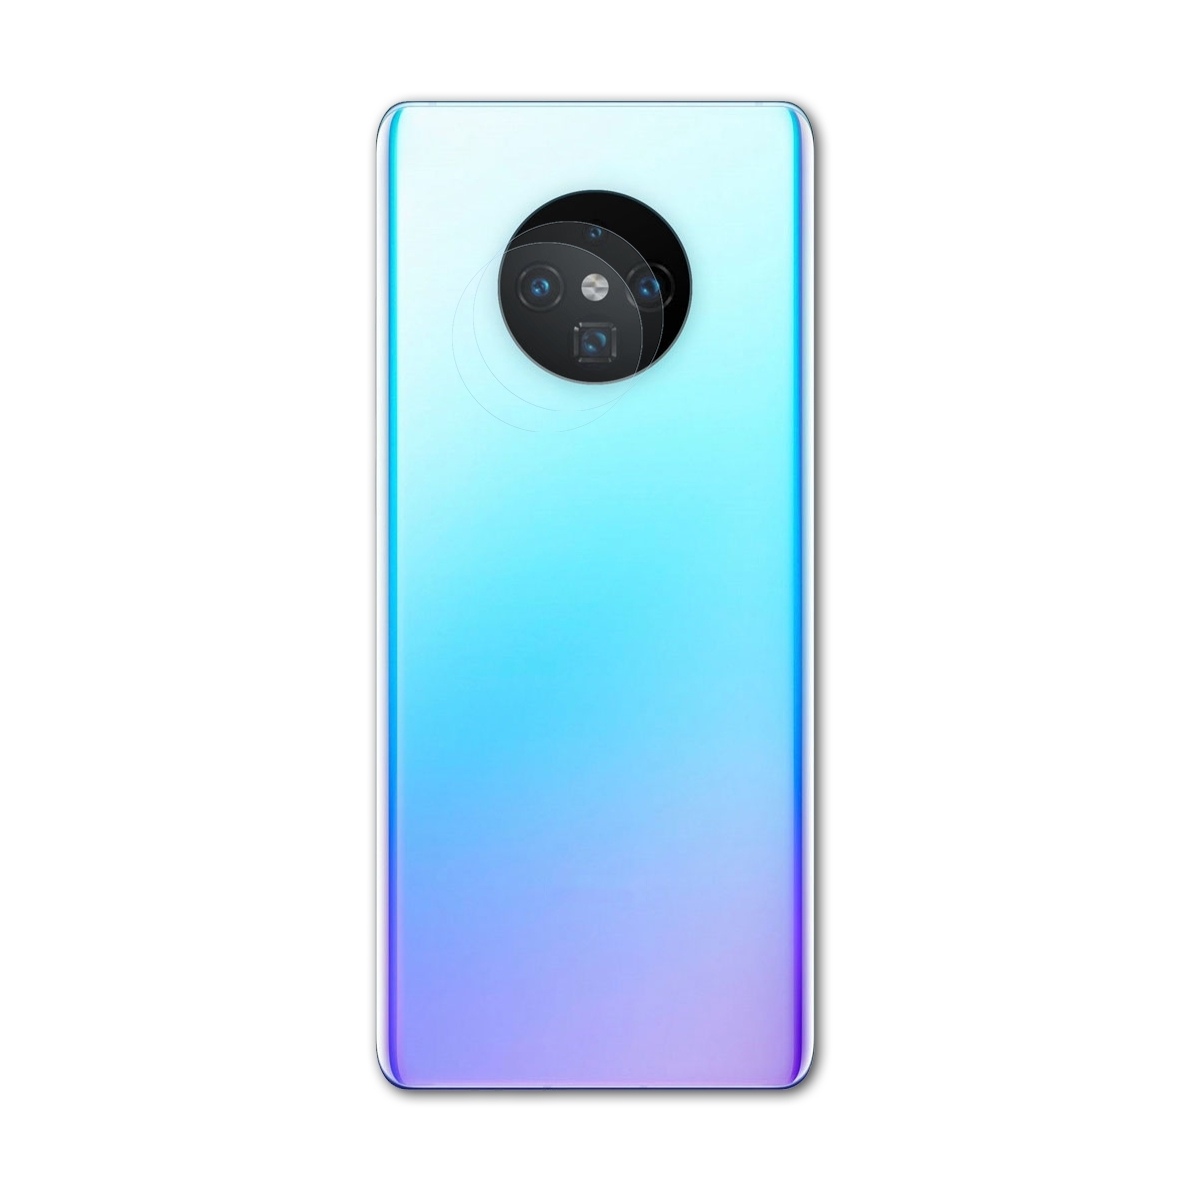 2x Basics-Clear Huawei Pro Schutzfolie(für Mate BRUNI 30 (Lens))